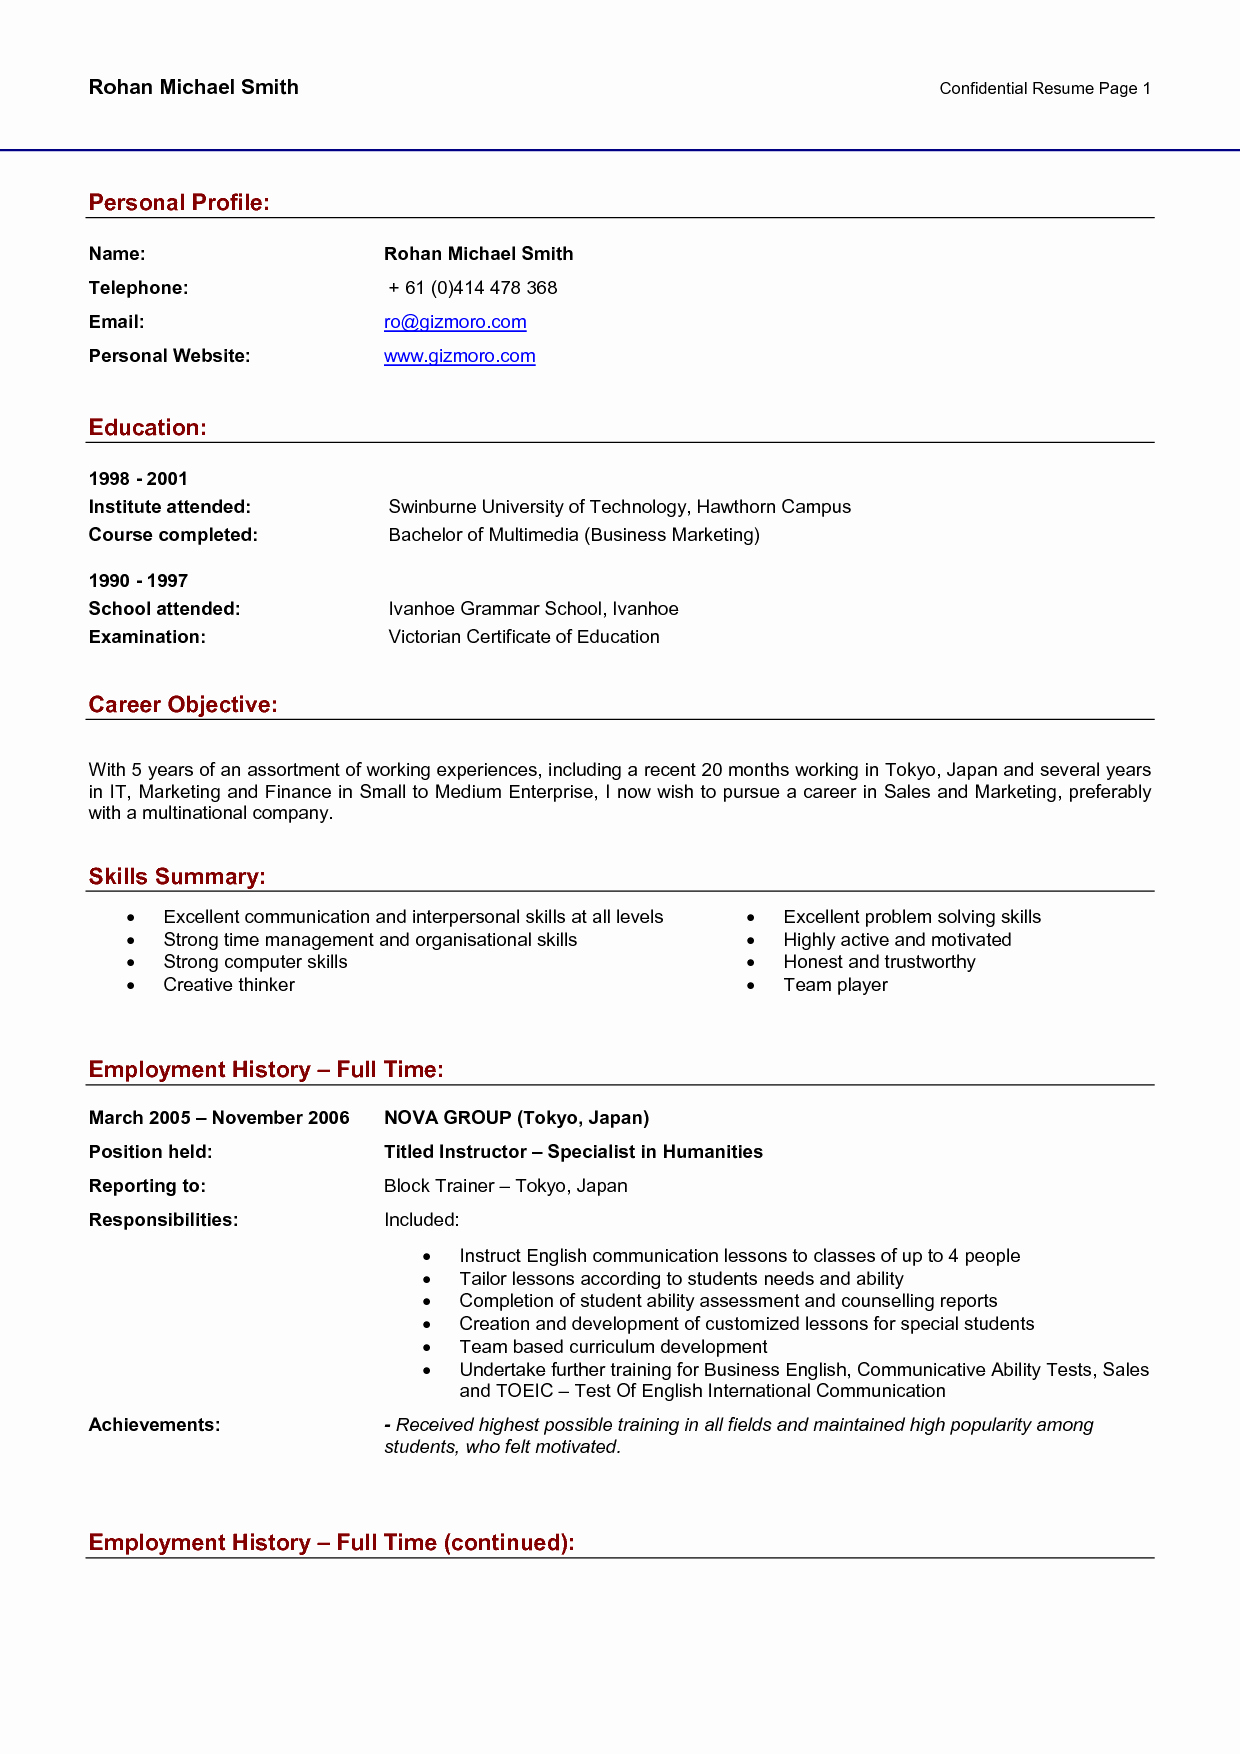 Resume Examples Profile Section Bongdaao